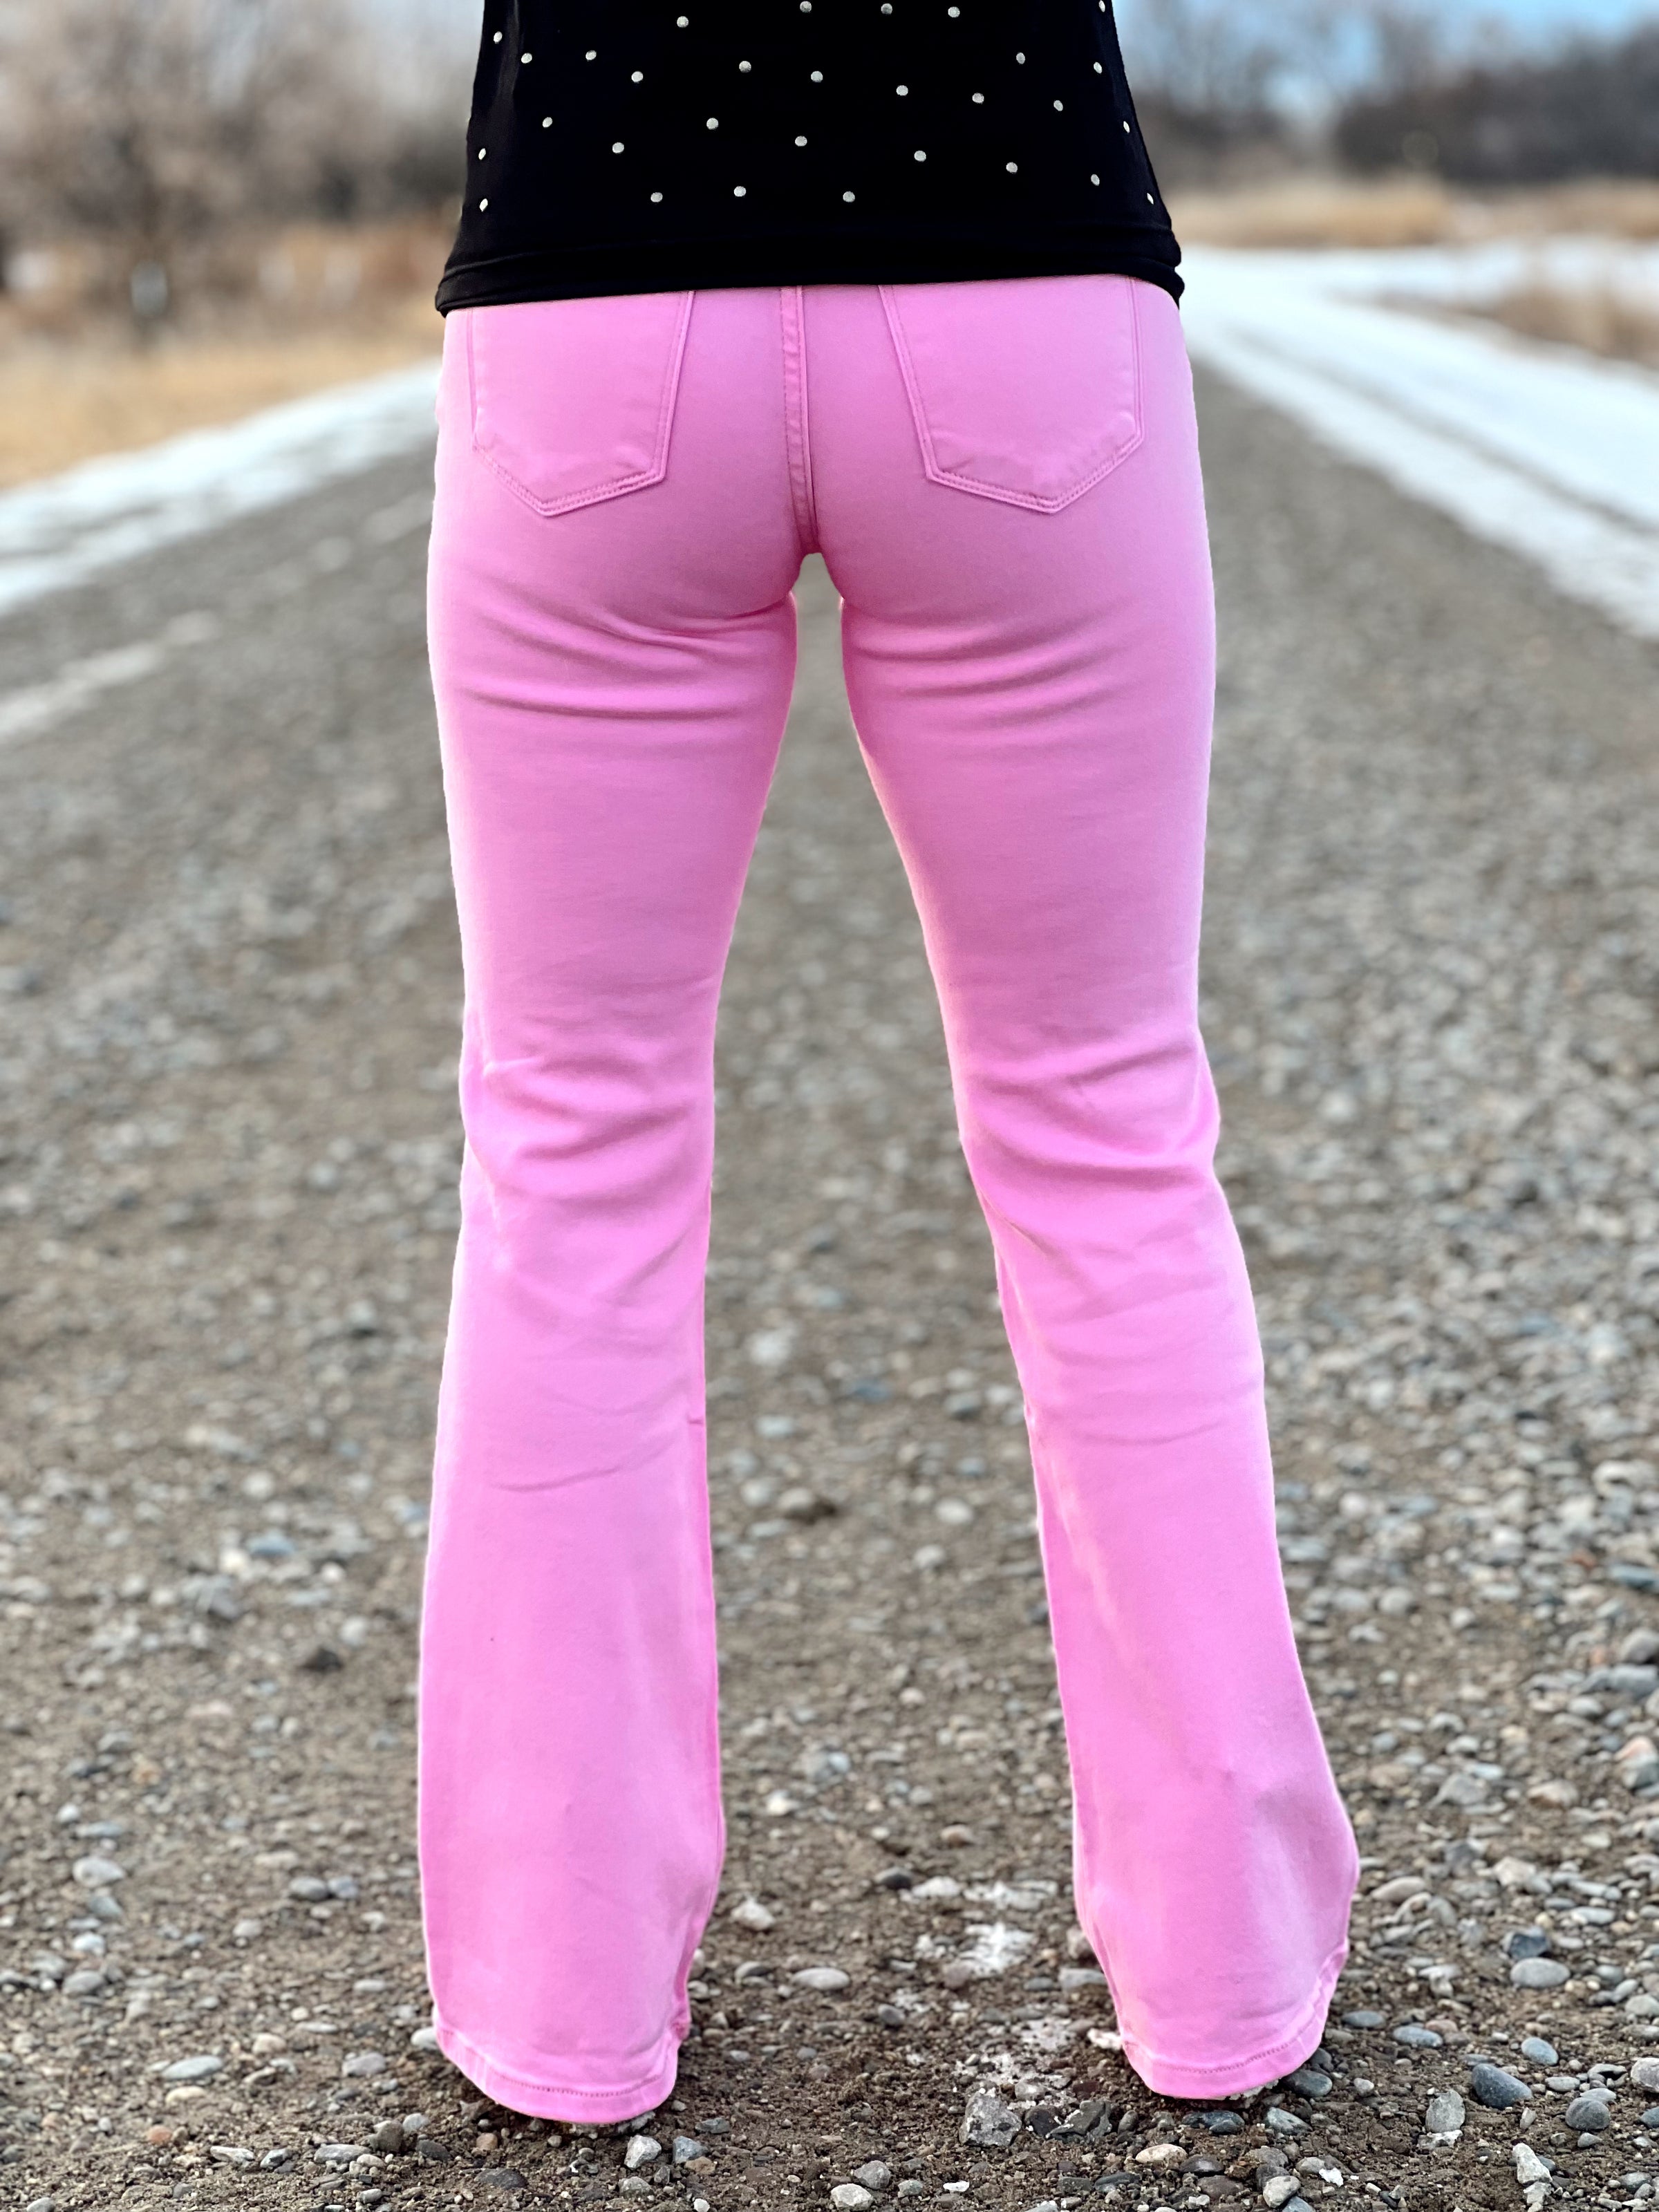 The Pink Denim Jeans